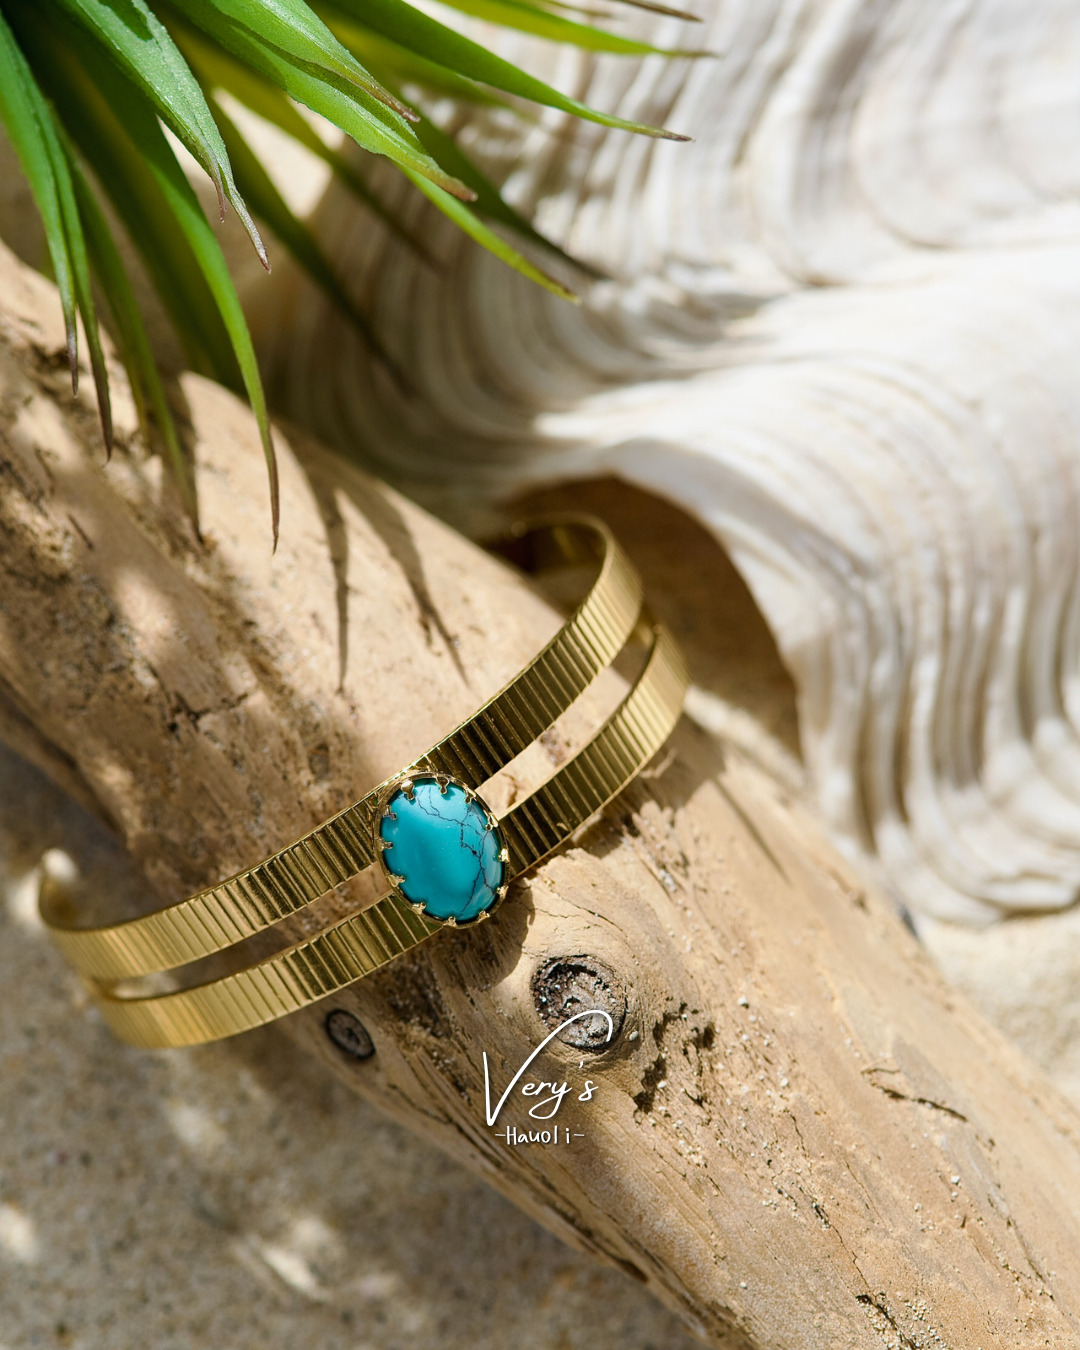 Turquoise Bangle【Very's Jewelry】 | Very's Hauoli - 公式サイト